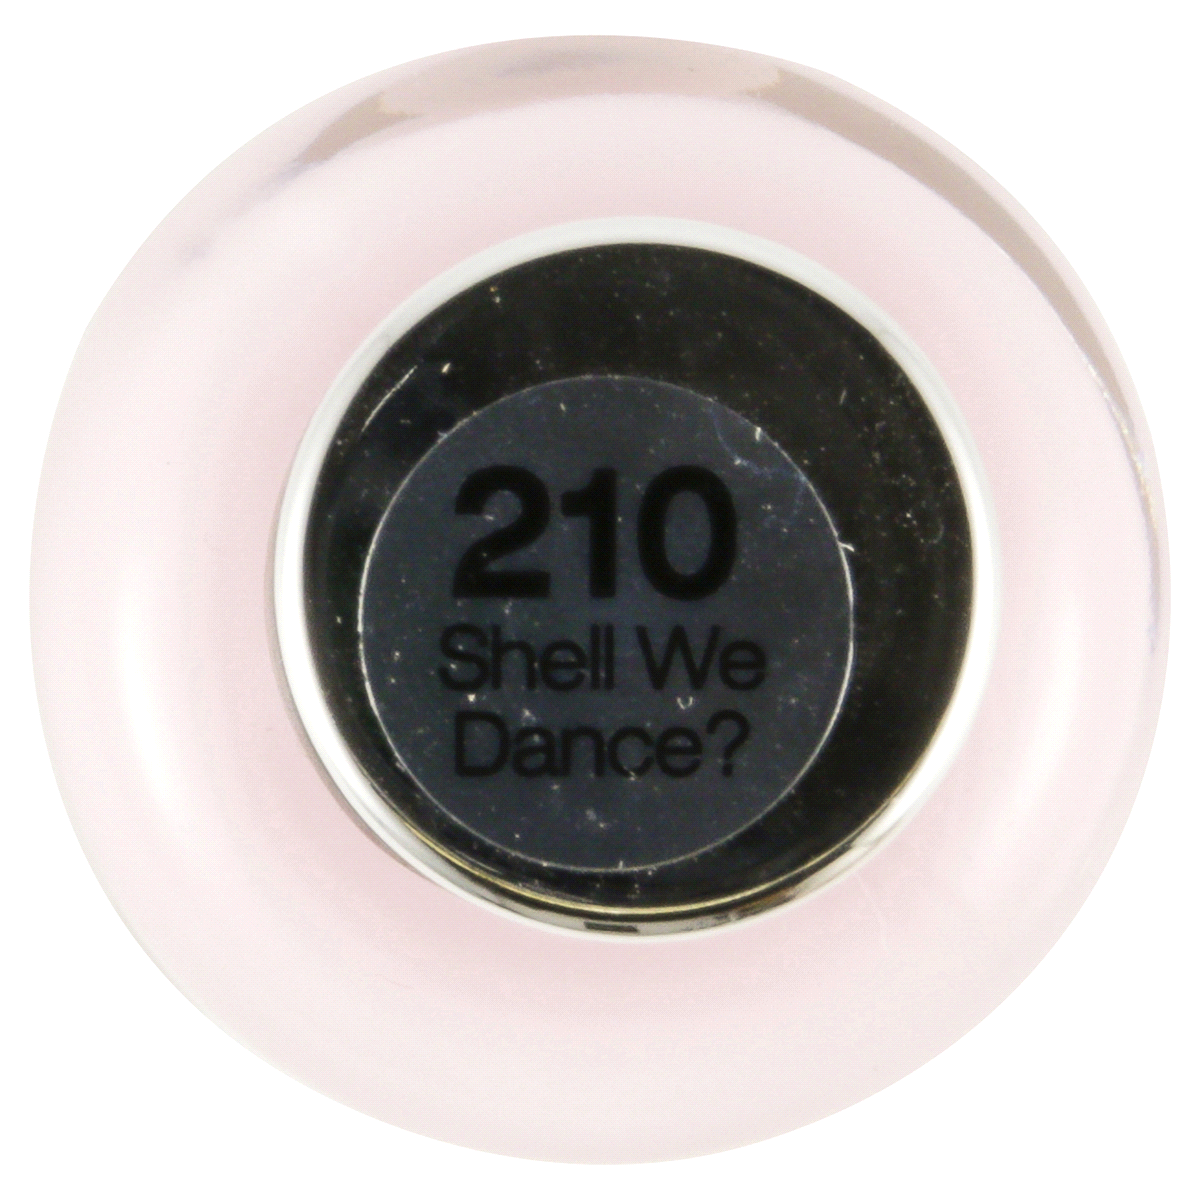 slide 2 of 3, Sally Hansen Complete Salon Manicure - Shell We Dance?, 0.5 oz